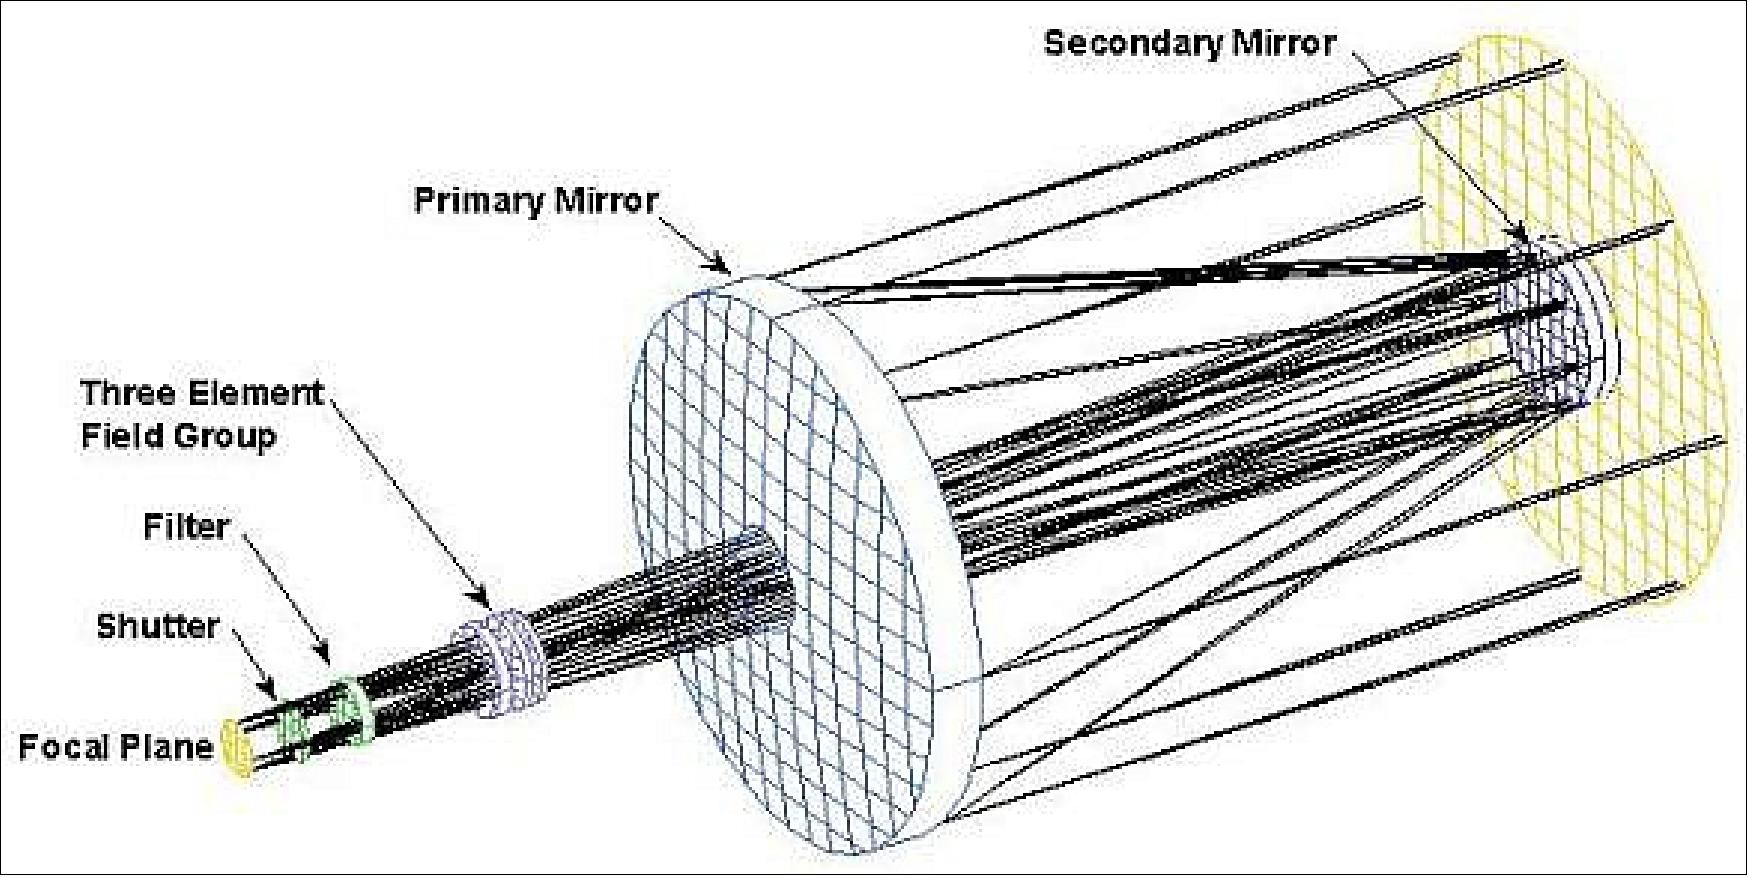 Figure 39: Schematic view of the Cassegrain telescope (image credit: NASA, Ref. 11)